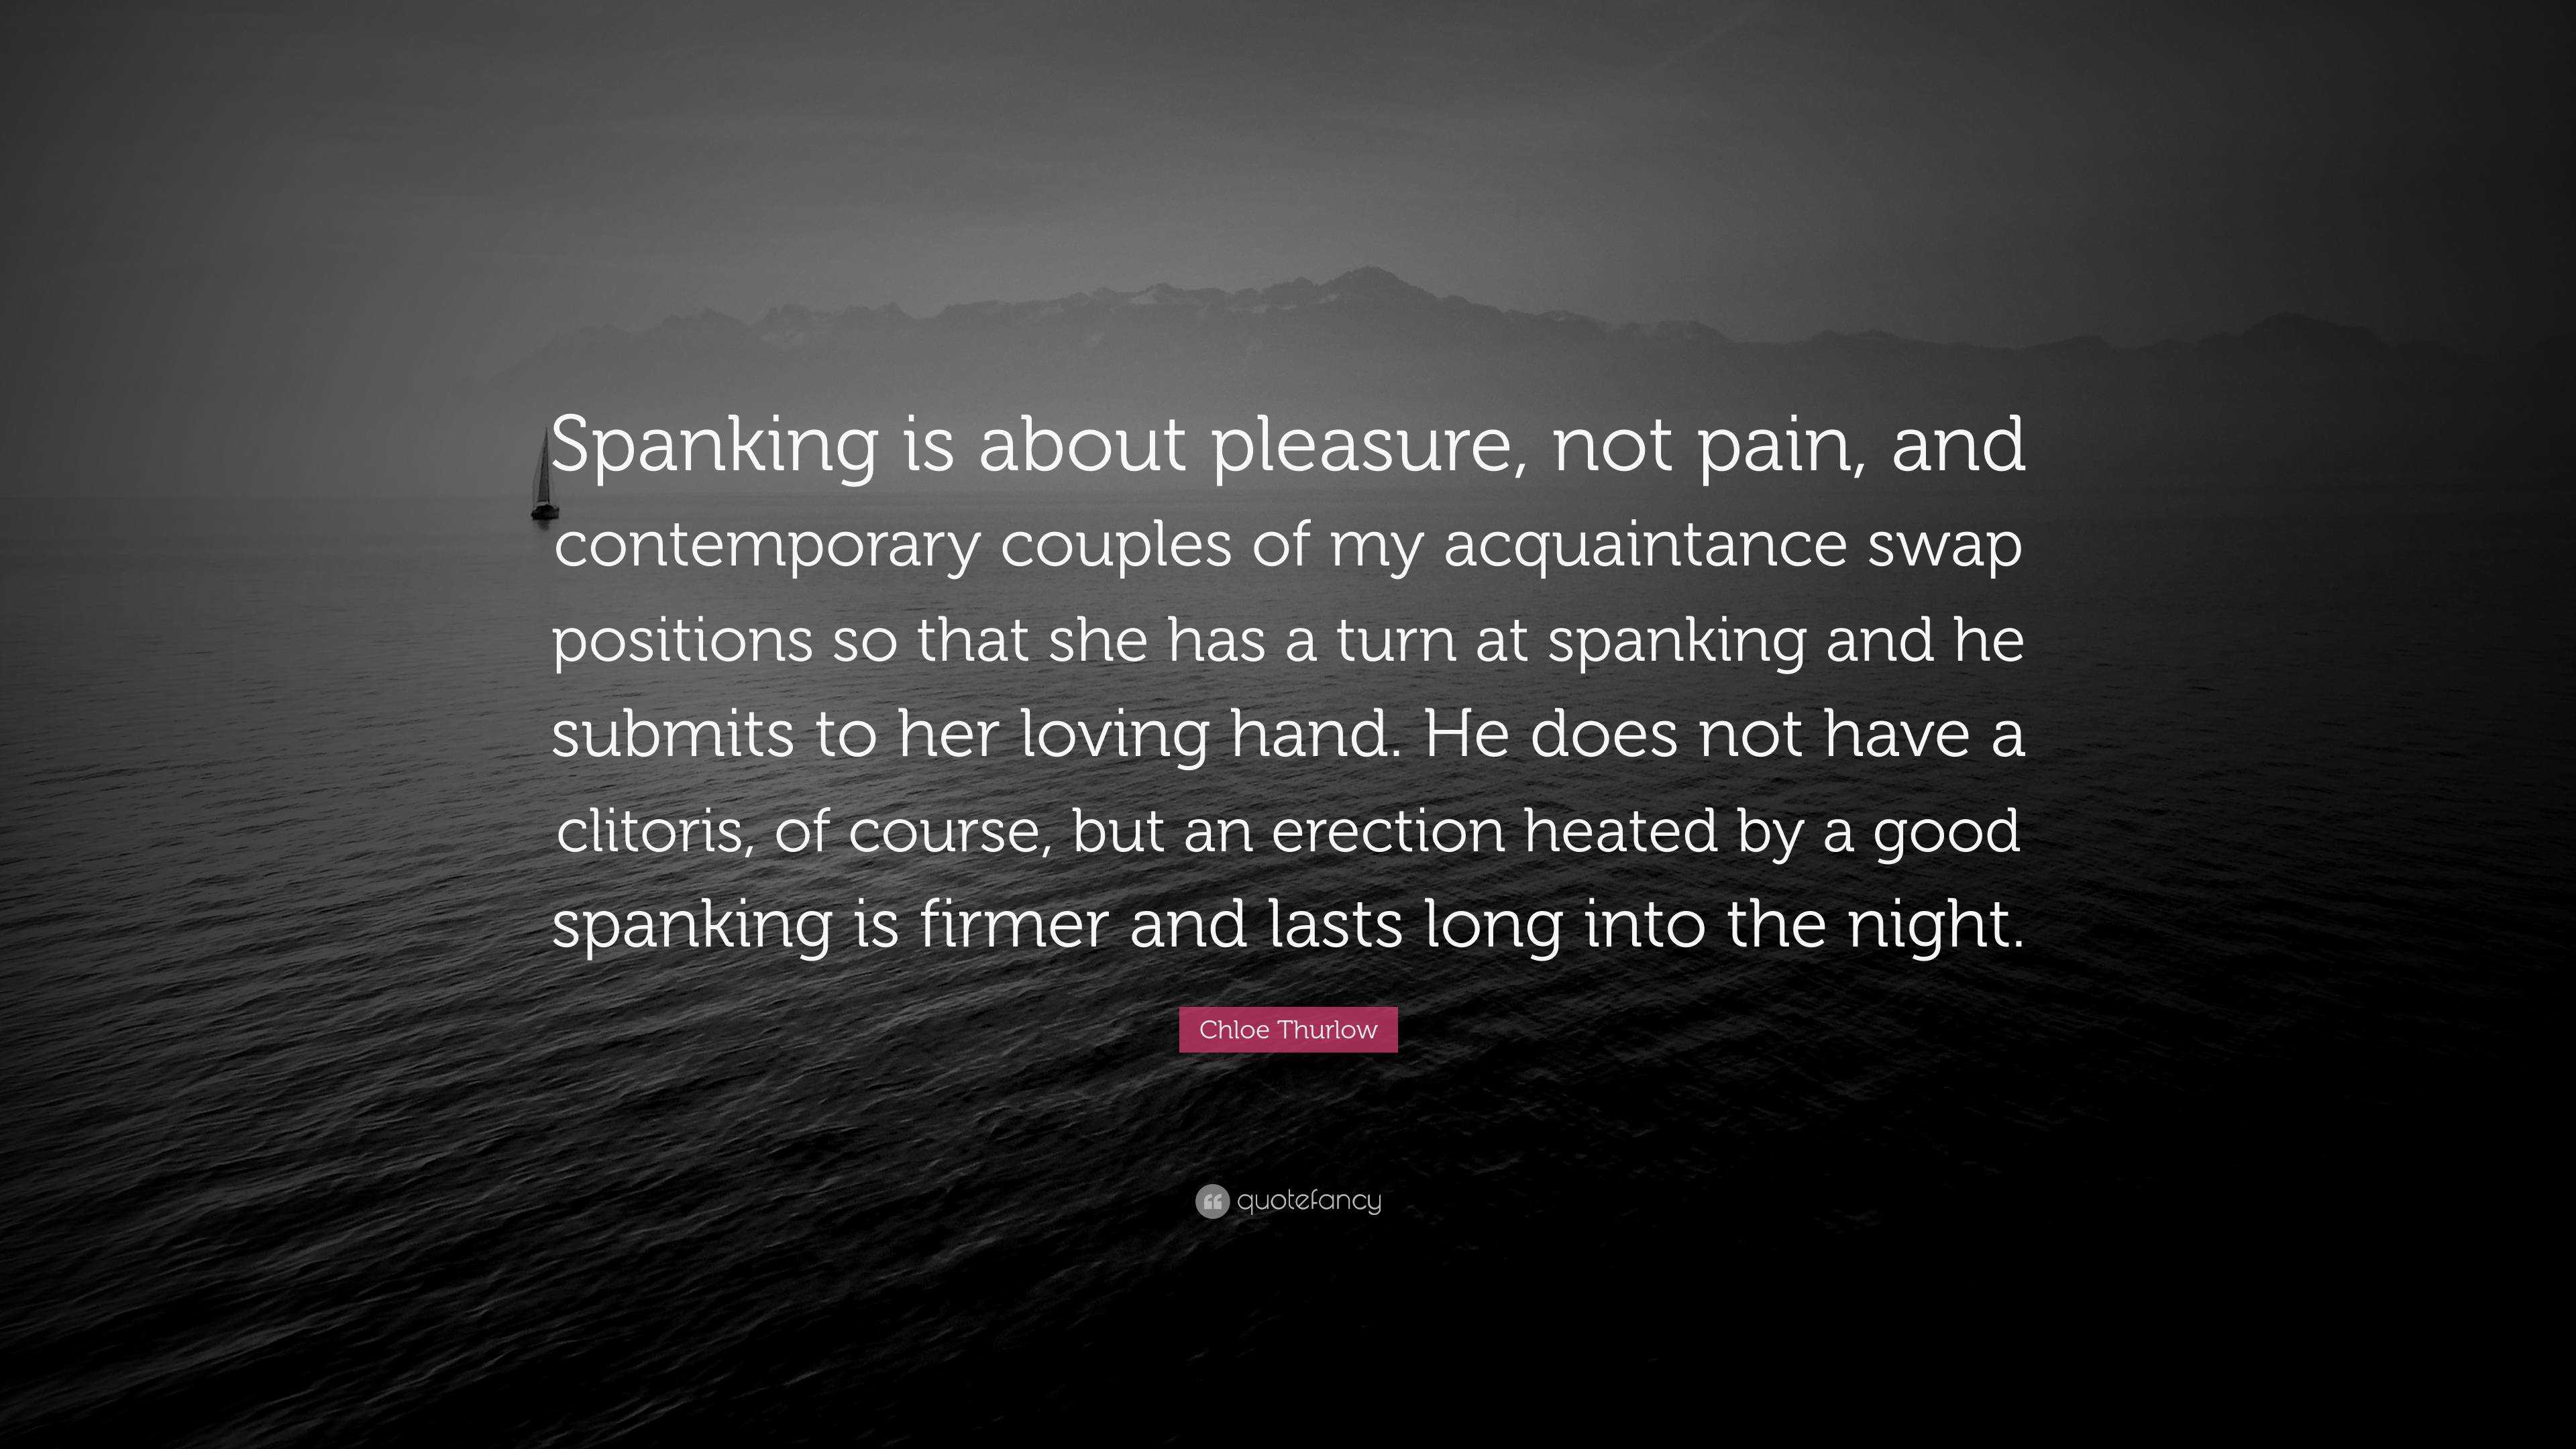 Spanking Pain